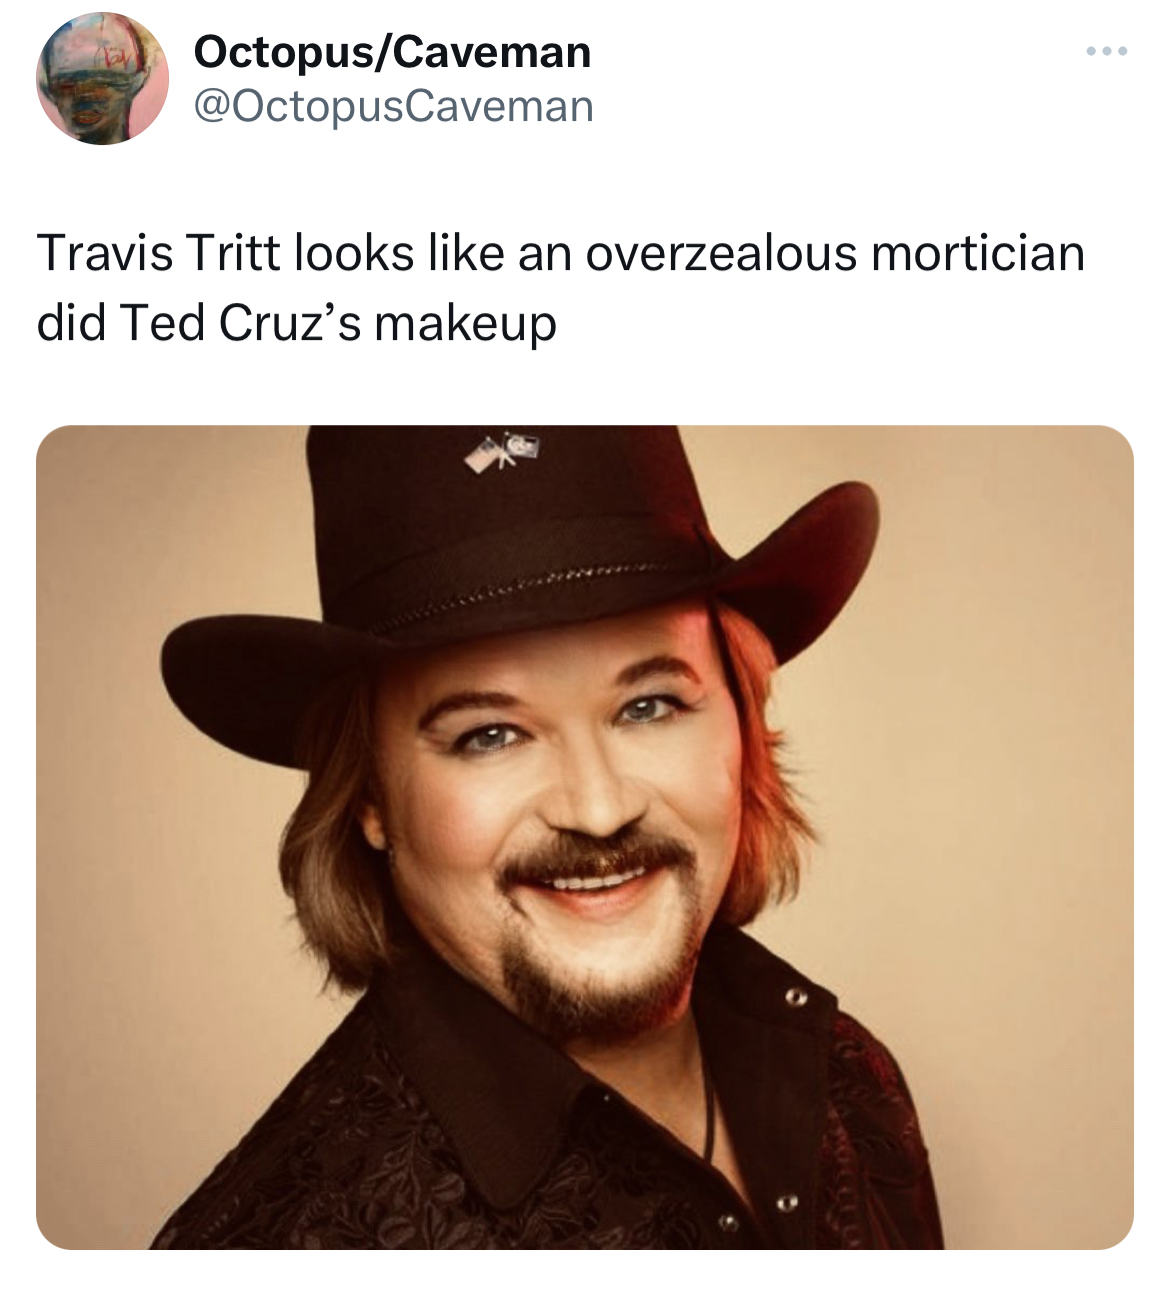 savage and salty tweets - travis tritt sexy - OctopusCaveman Travis Tritt looks an overzealous mortician did Ted Cruz's makeup